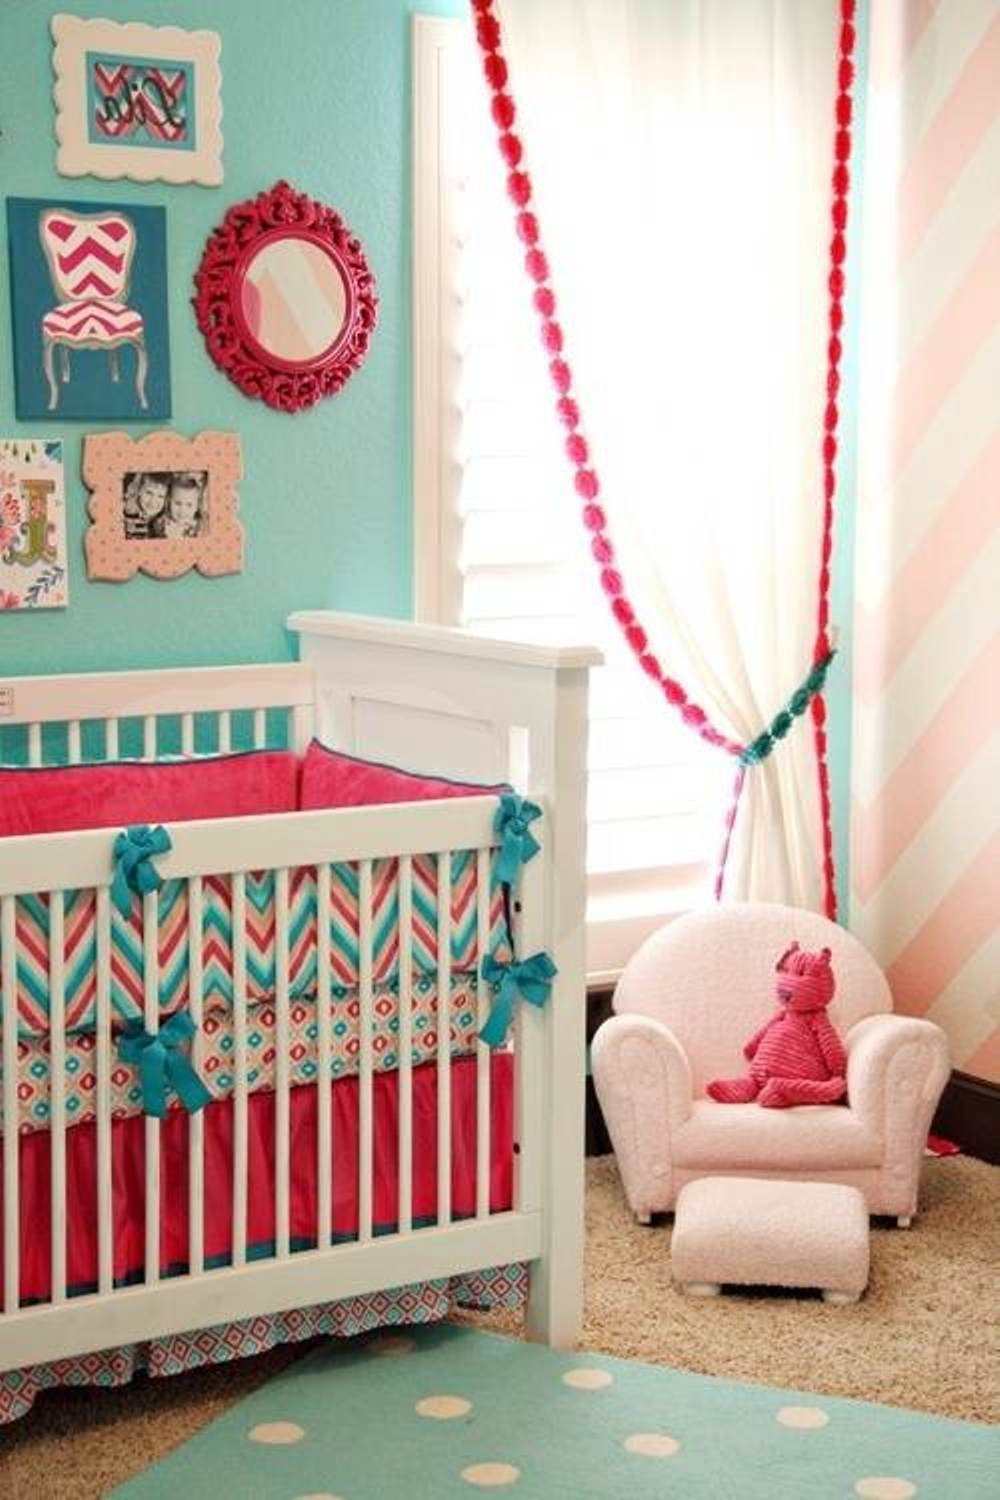 Baby Girl Bedroom Decor Ideas
 25 Baby Bedroom Design Ideas For Your Cutie Pie